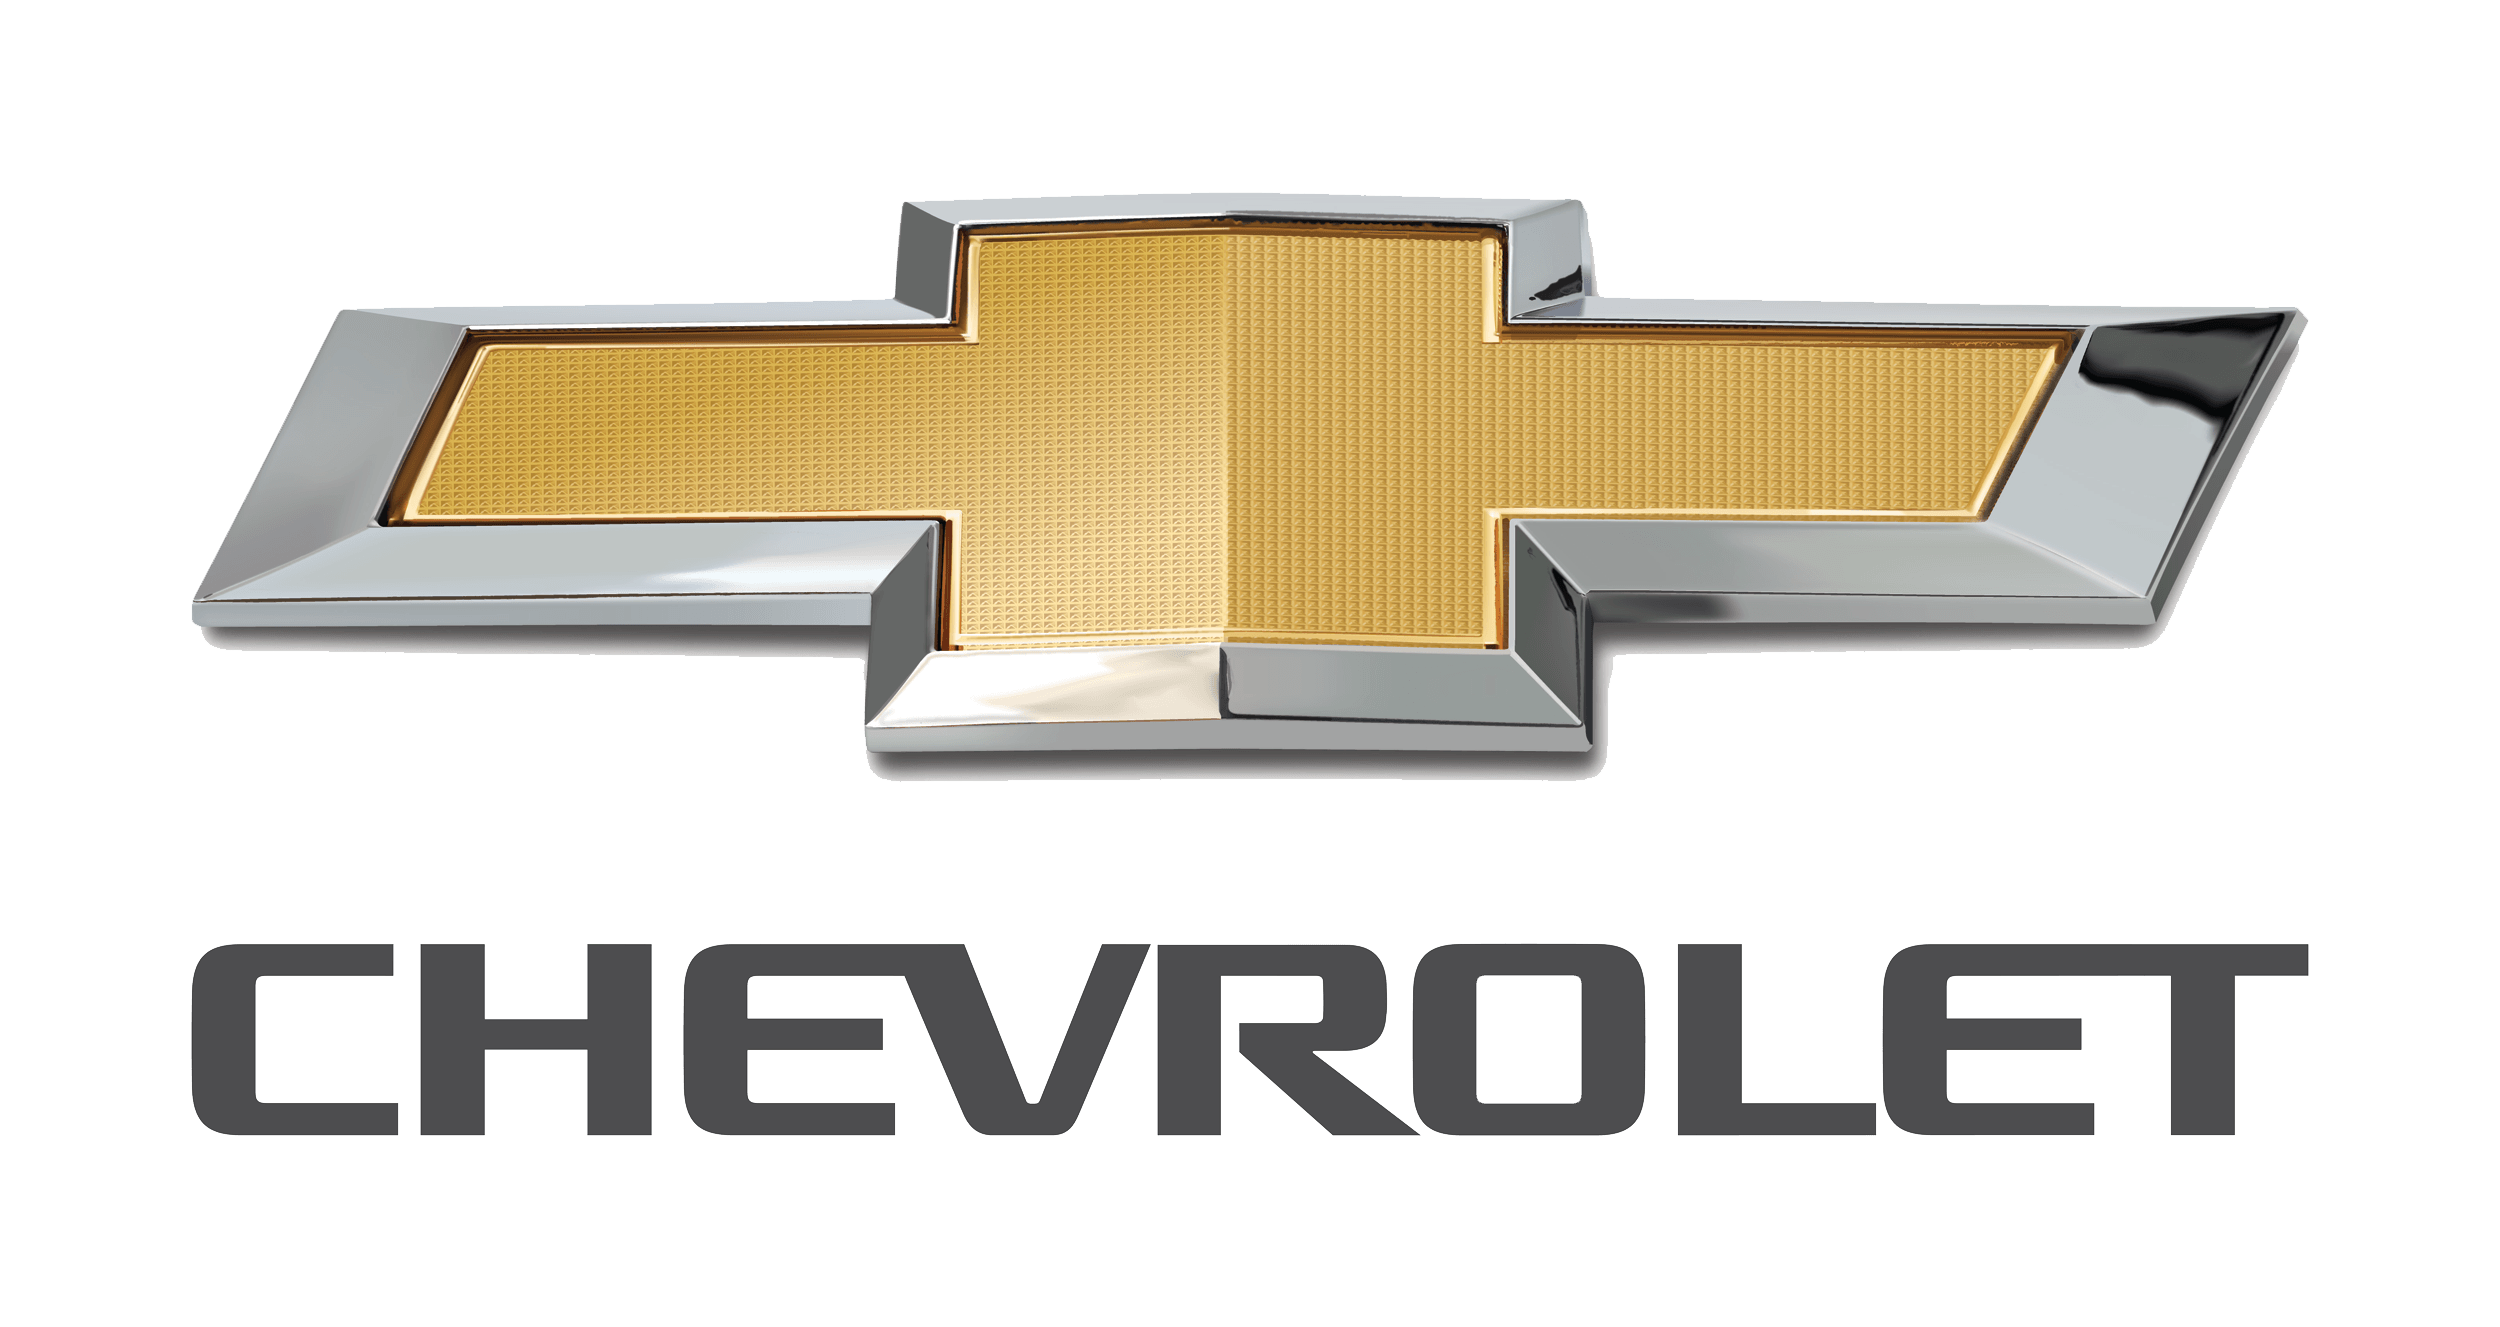 New Chevy Logo - Clark Chevrolet Cadillac Inc. is a Pinehurst Chevrolet dealer and a ...